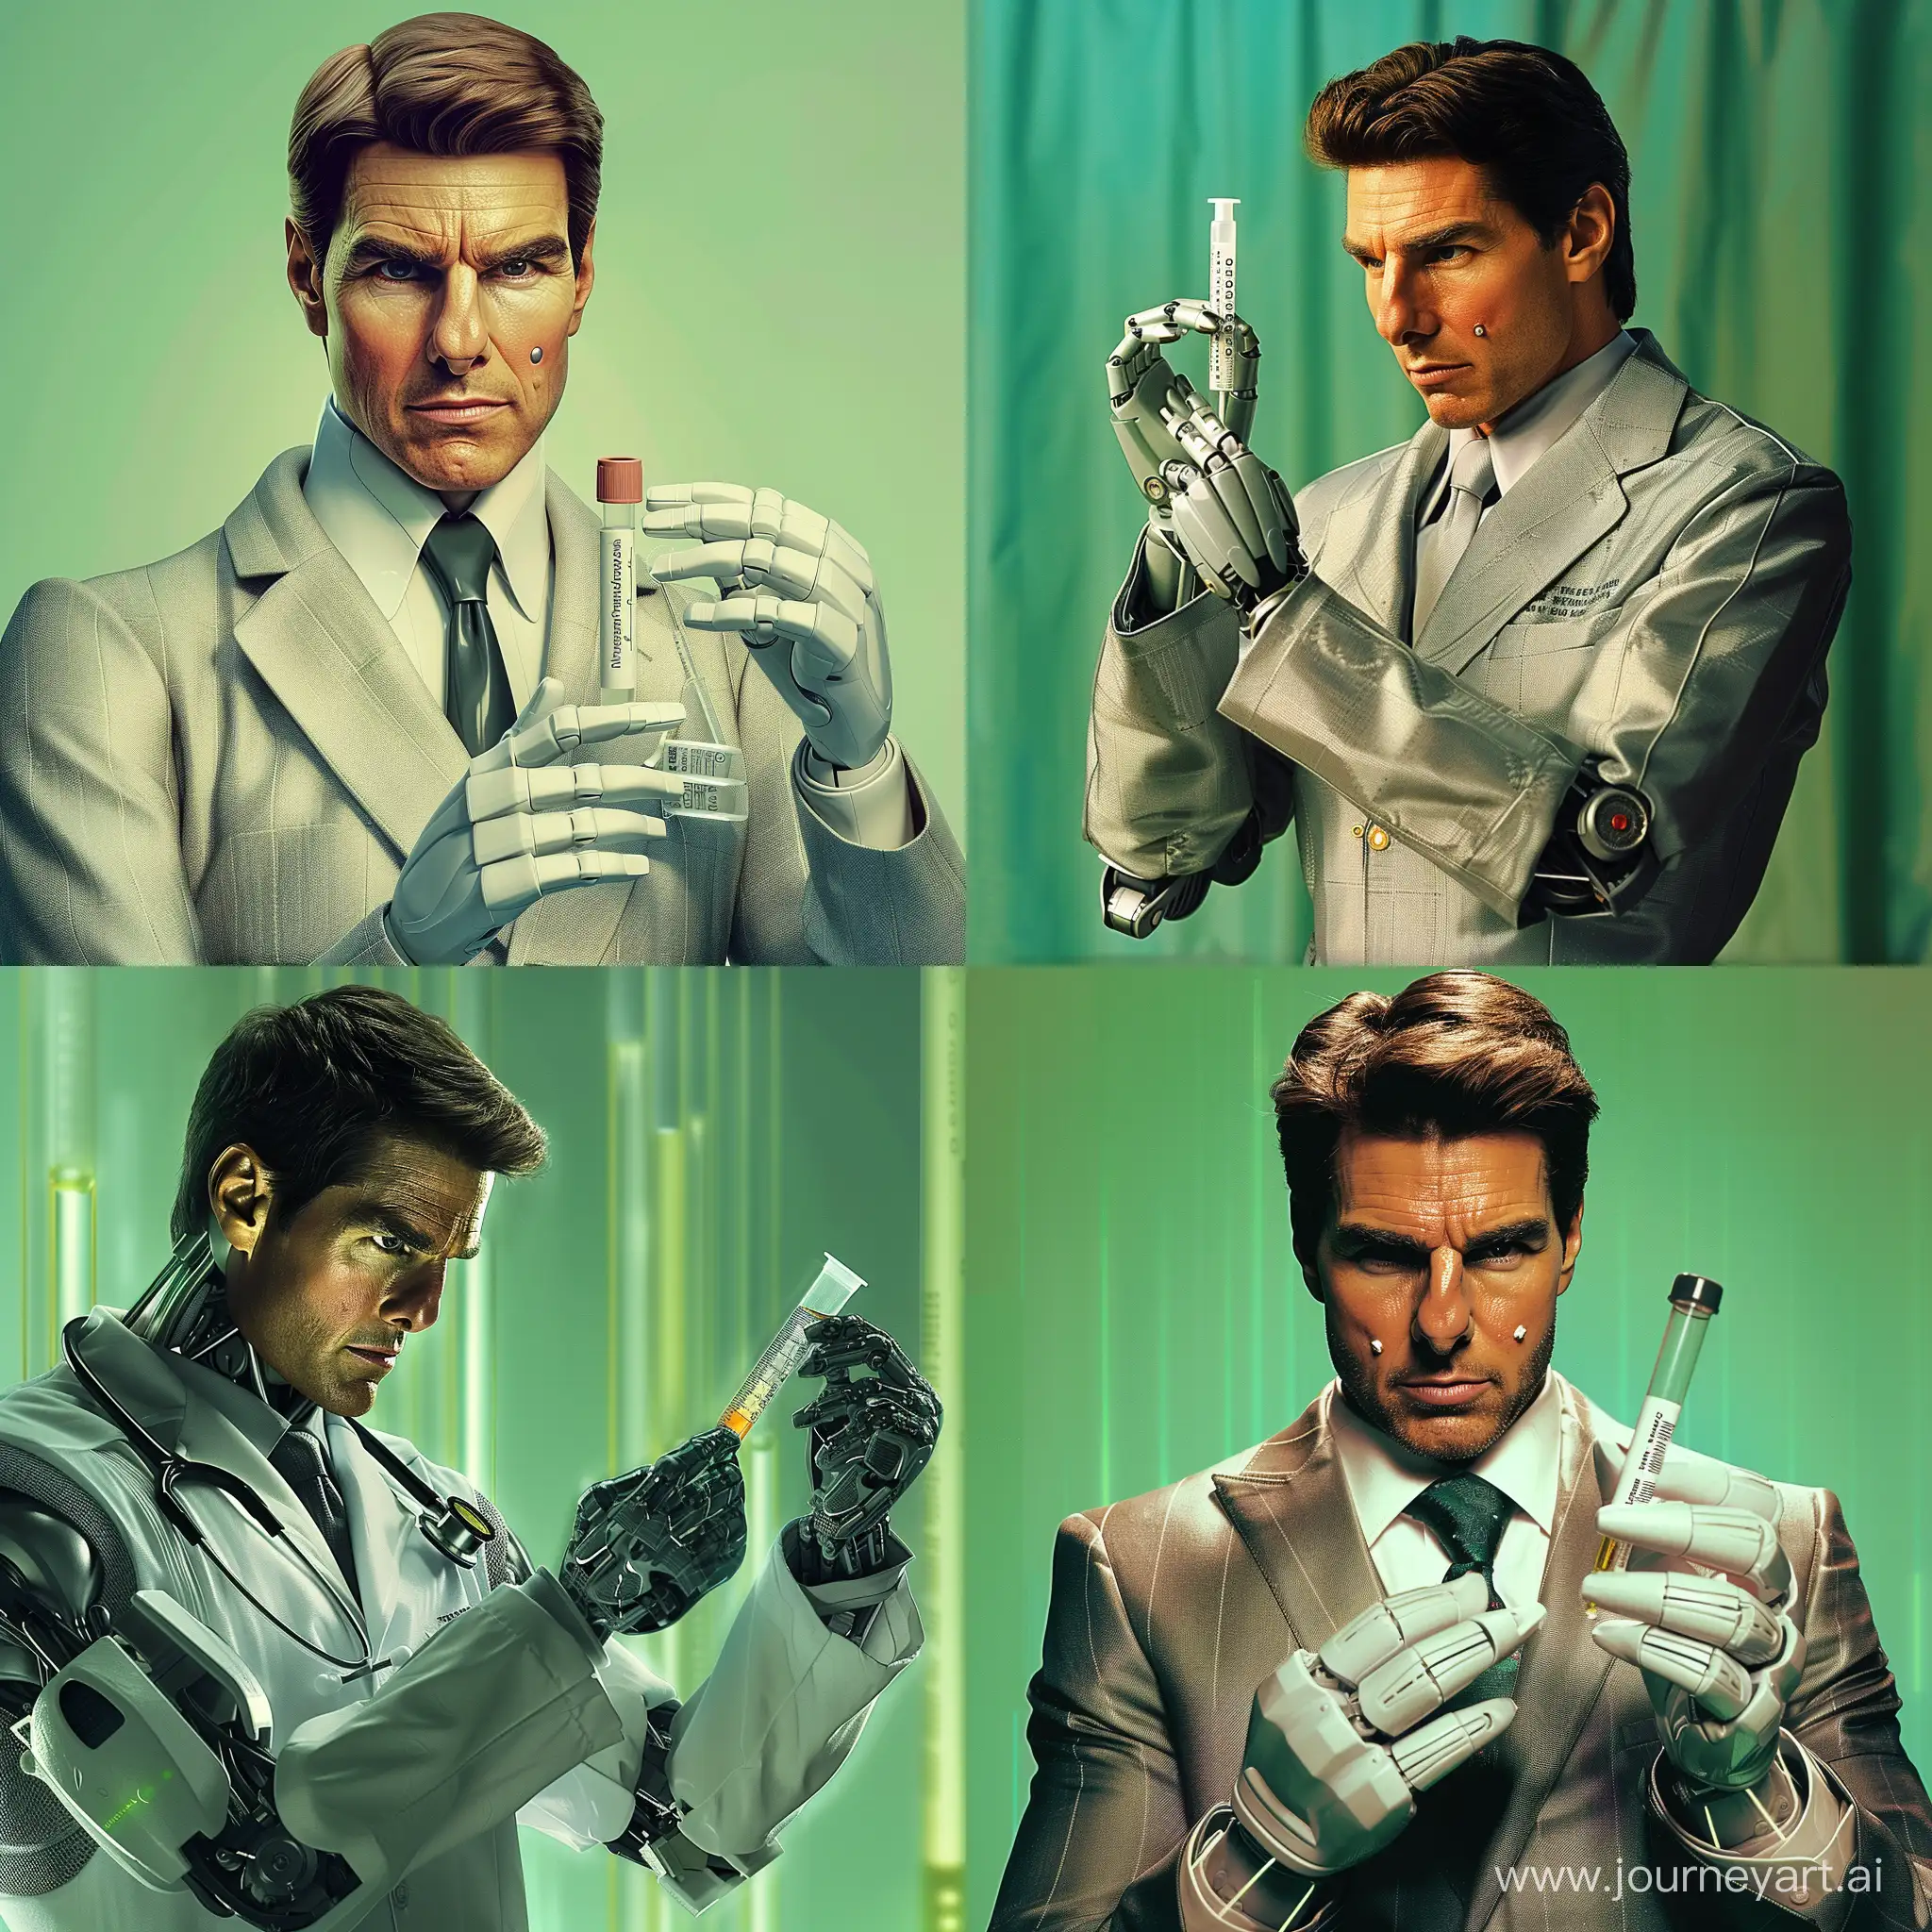 Handsome-Robot-Doctor-Tom-Cruise-Holding-Test-Tube-on-Green-Background